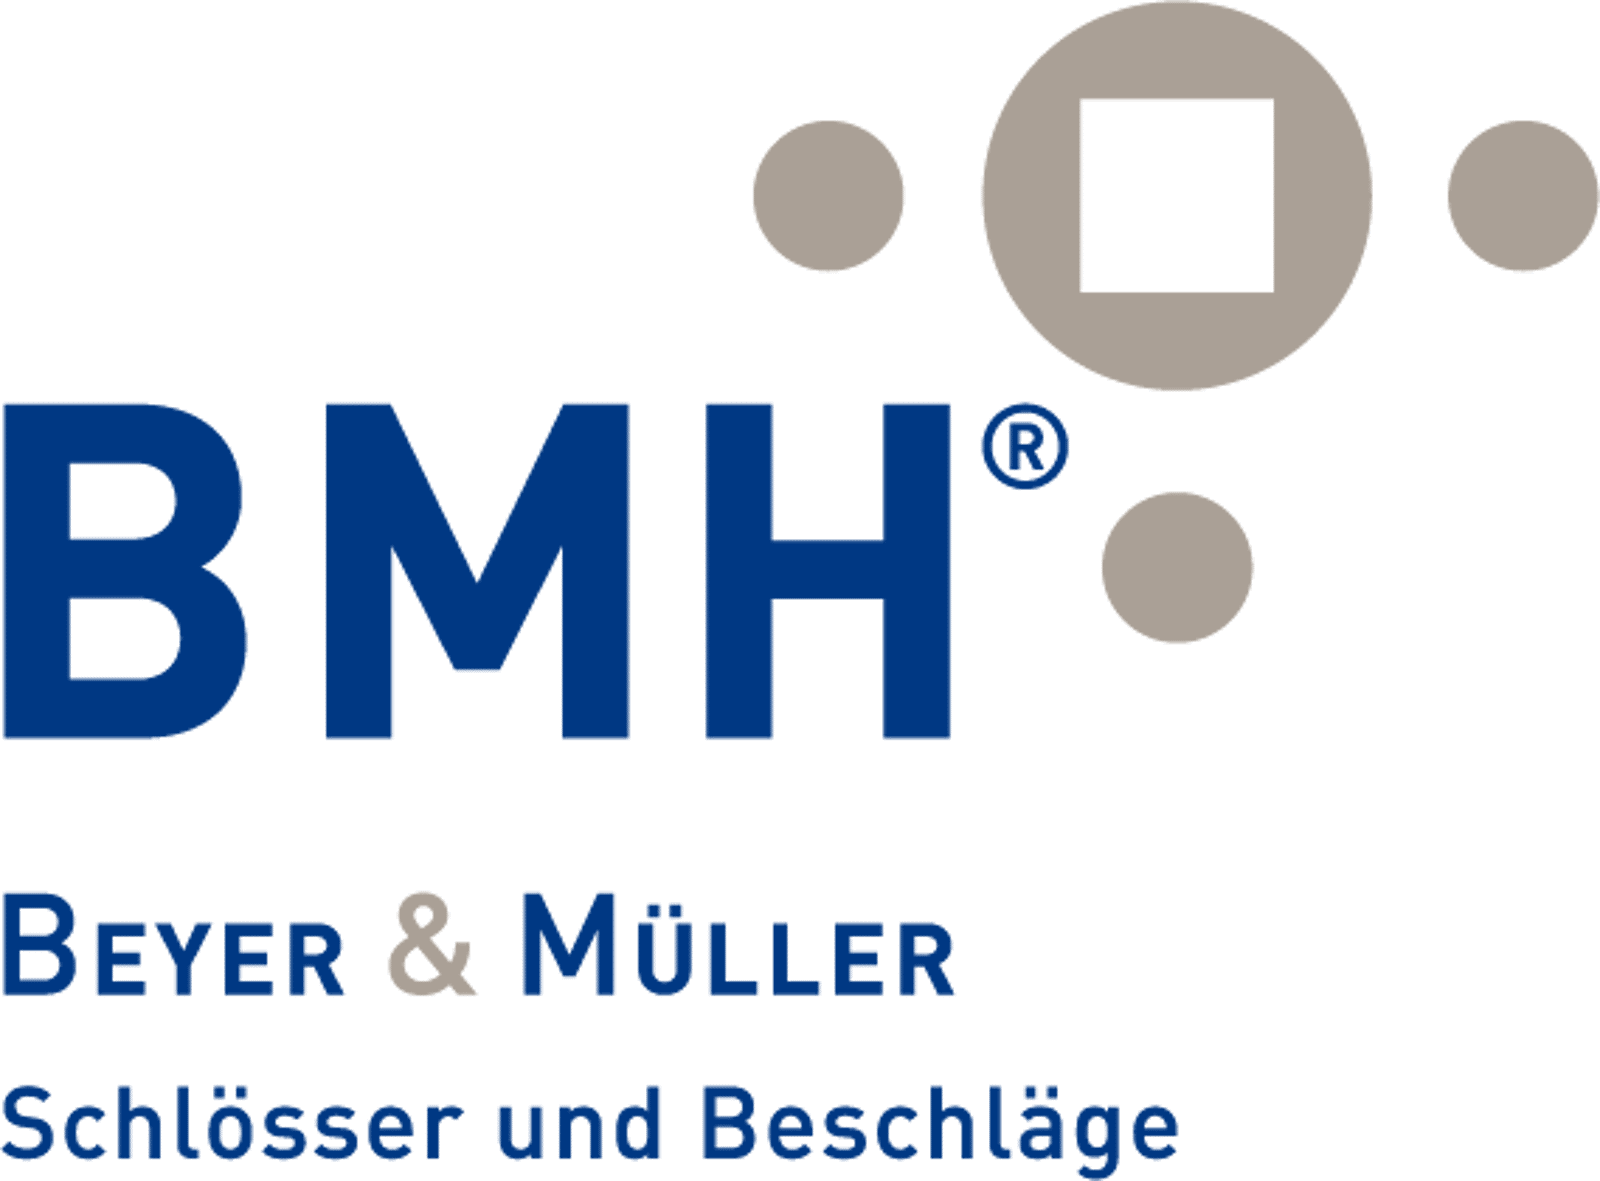 Beyer & Müller